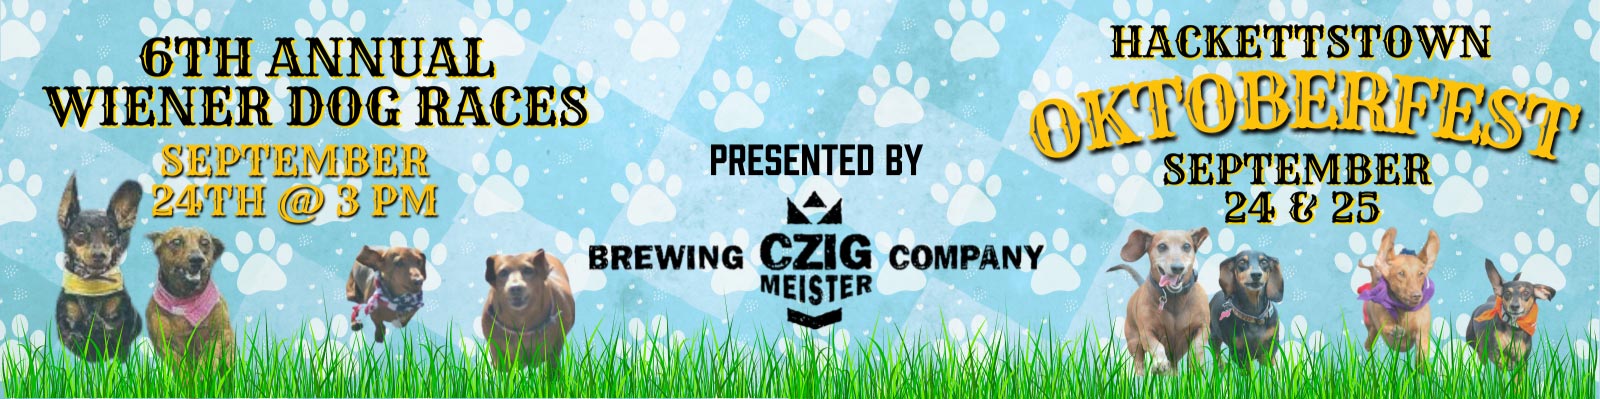 Czig Meister 2022 Okoberfest weiner dog race banner